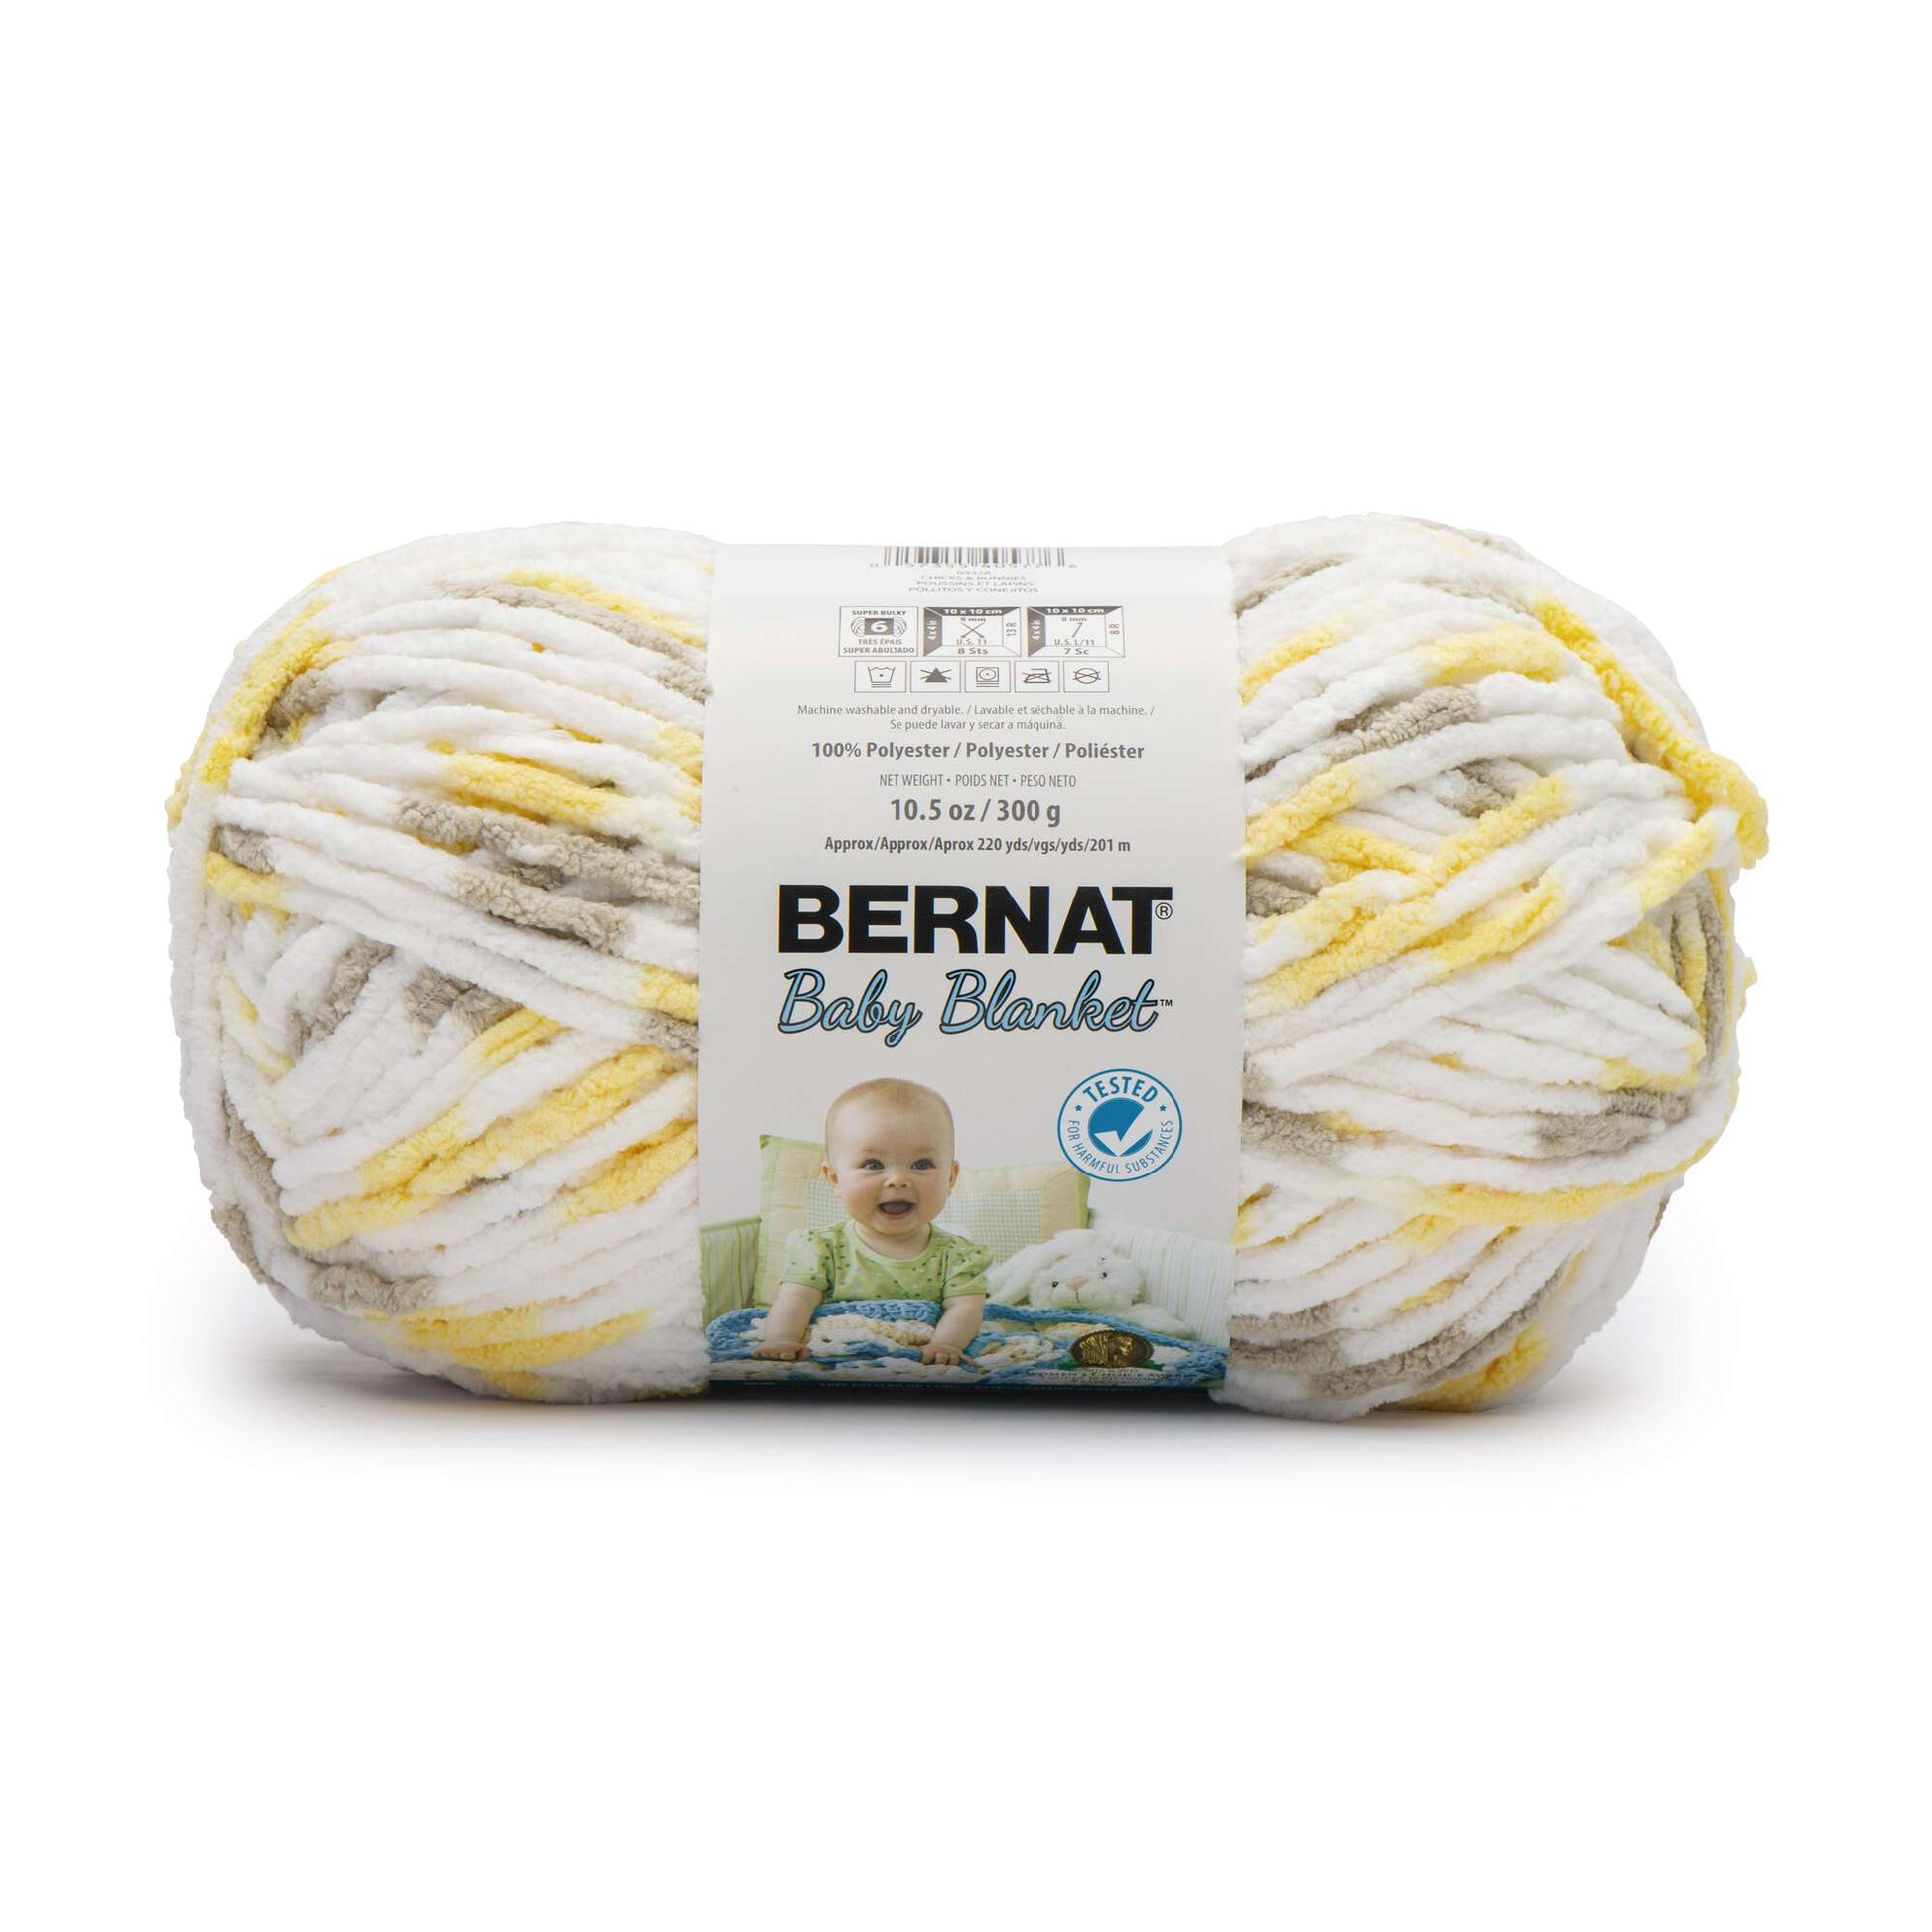 Bernat Baby Blanket Yarn (300g/10.5oz) Chick Bunnies